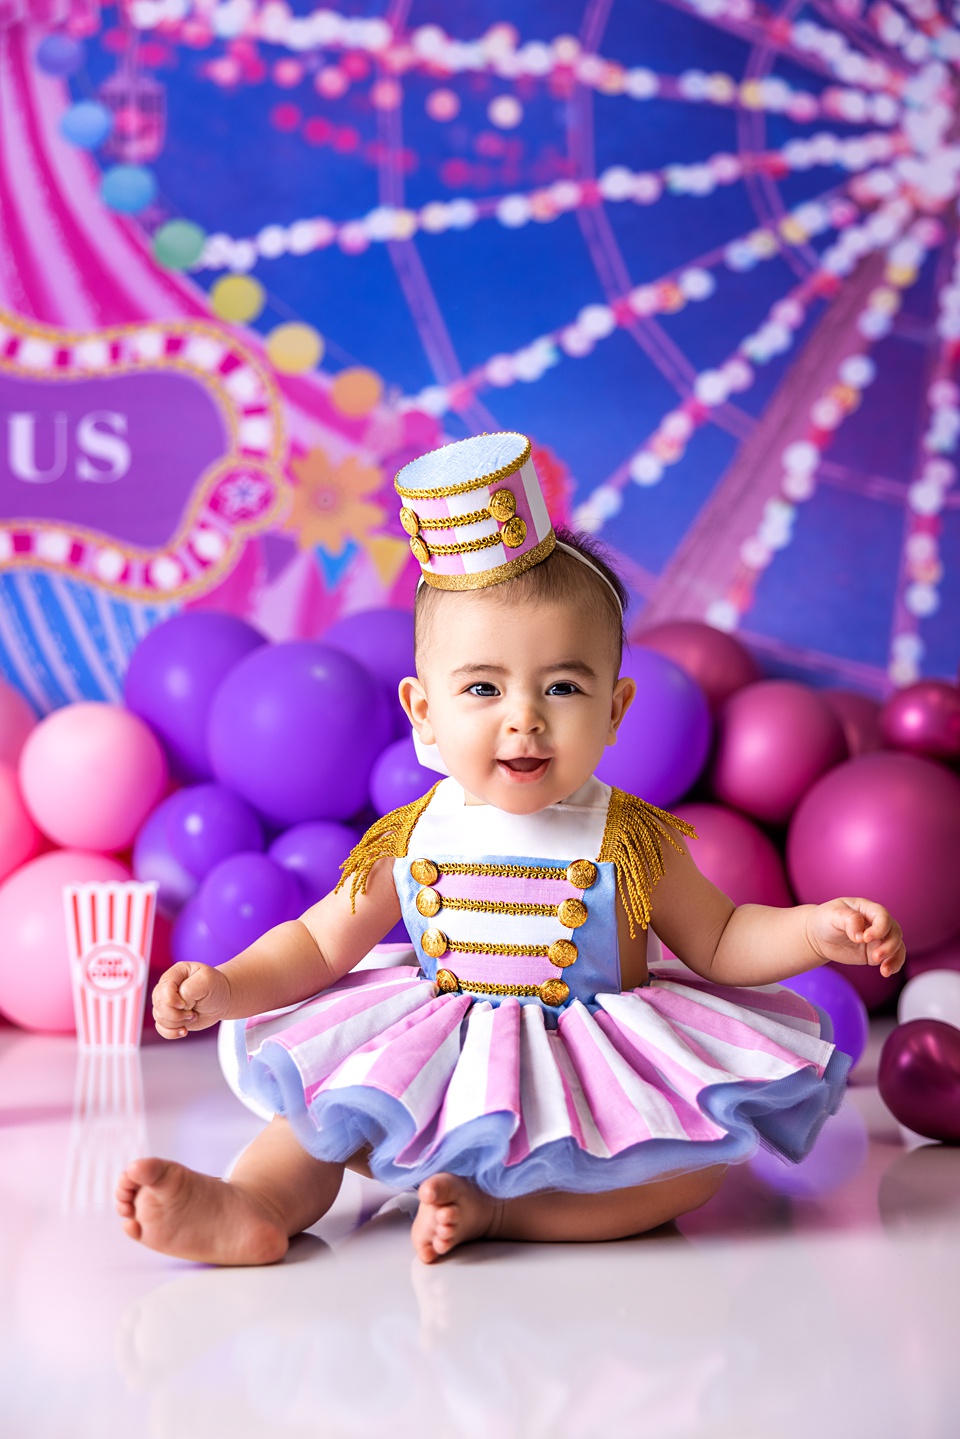 Baby Event Réunion - 🤹🏼‍♂️🤹🏾‍♀️🎪🎡Incroyable Anniversaire Thème CIRQUE  🎪🎟️🤹🏻‍♀️🤹🏽‍♂️ #one #anniversaire #birthday #evenement #event #fête  #candybar #sweettable #babyevent #cirque #circus #babyeventreunion  #balloons #ballons